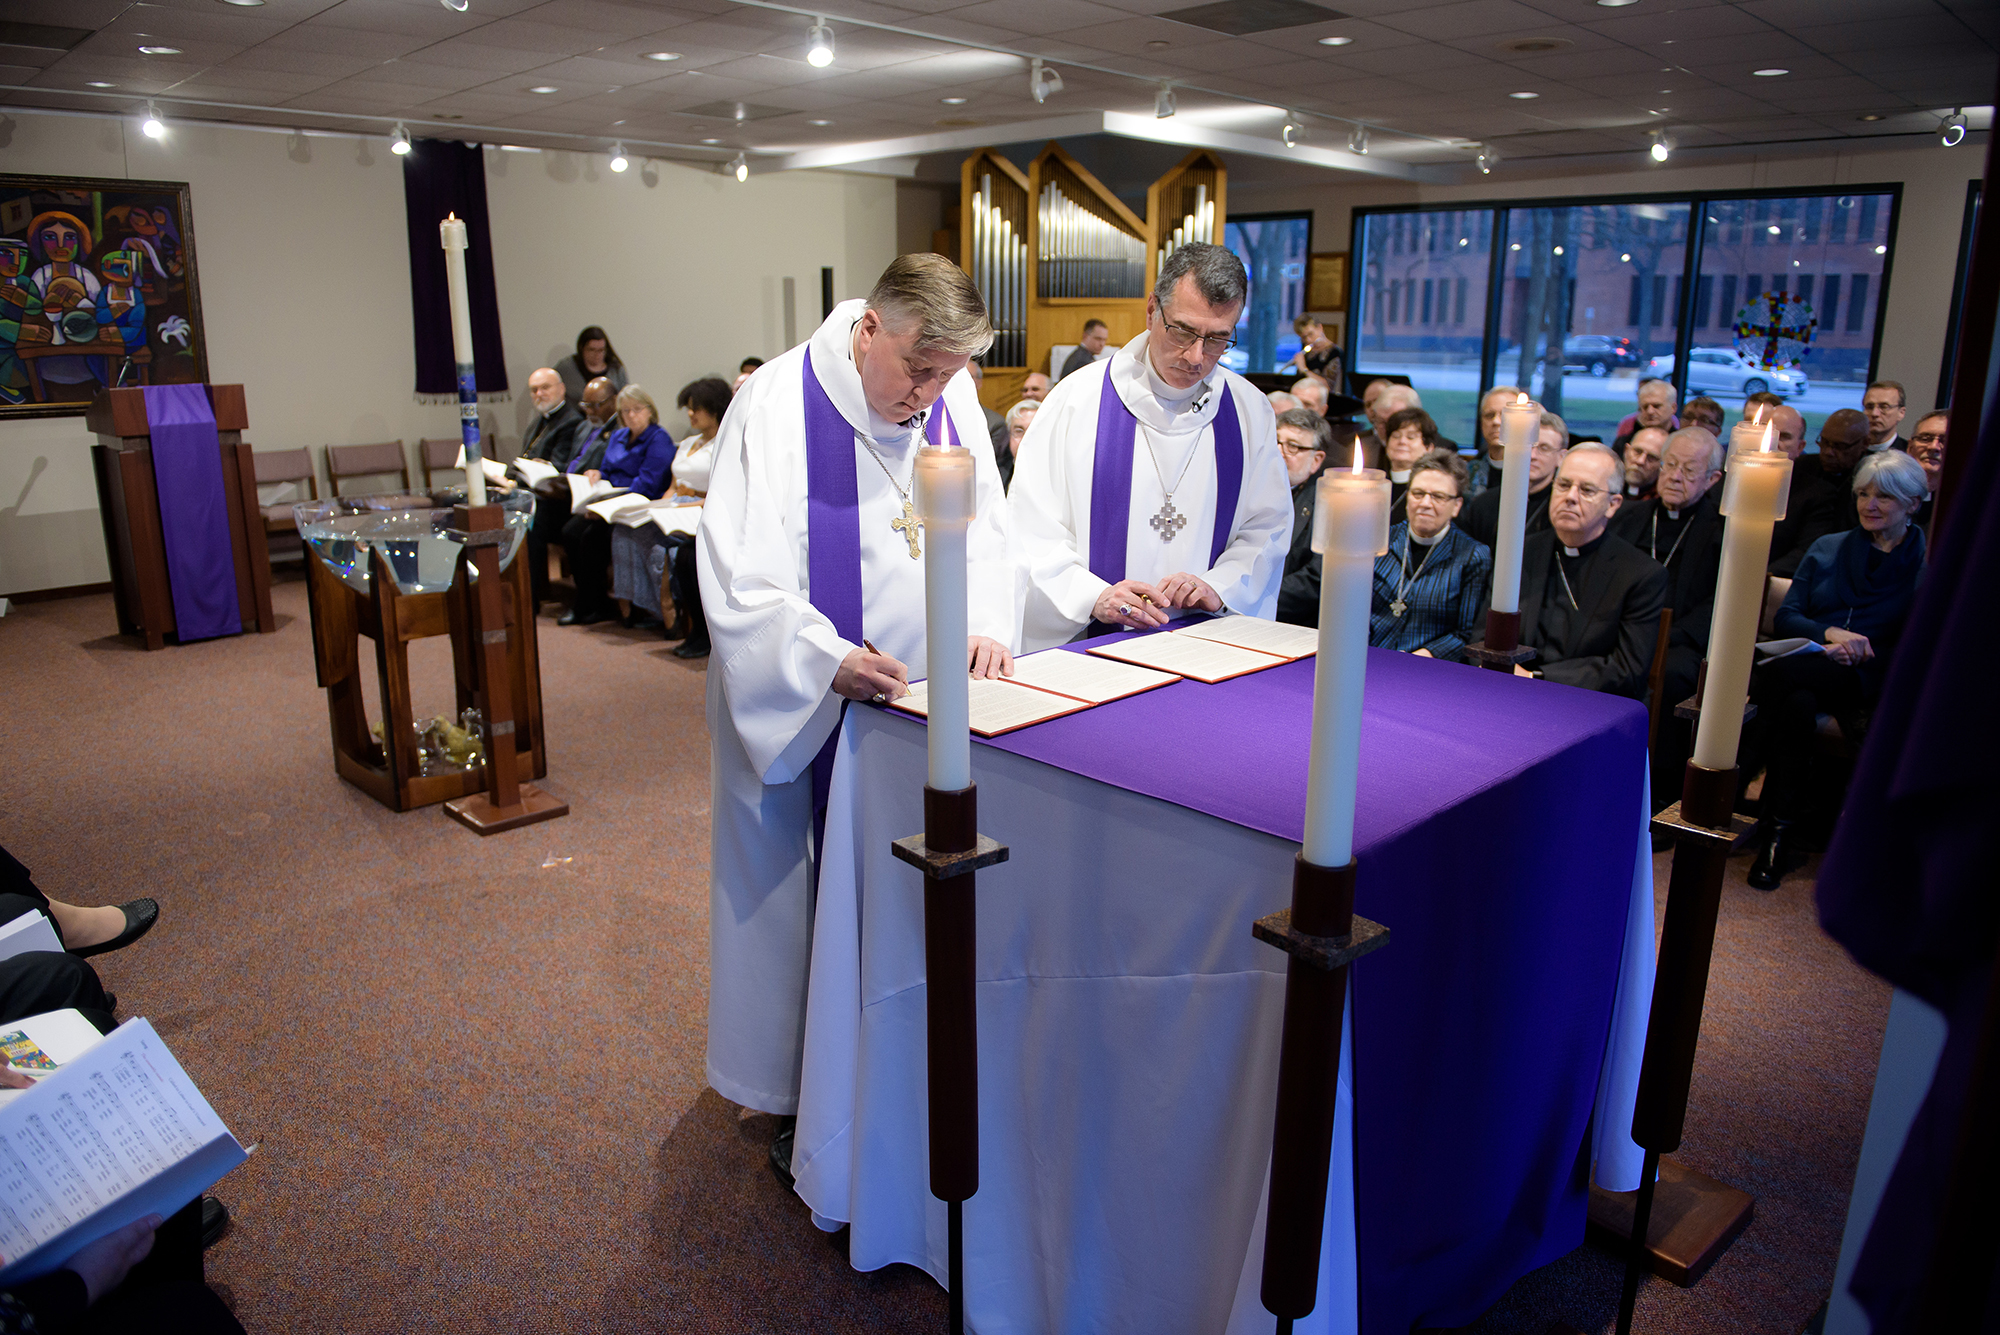 Lutheran-Catholic Service of Common Prayer